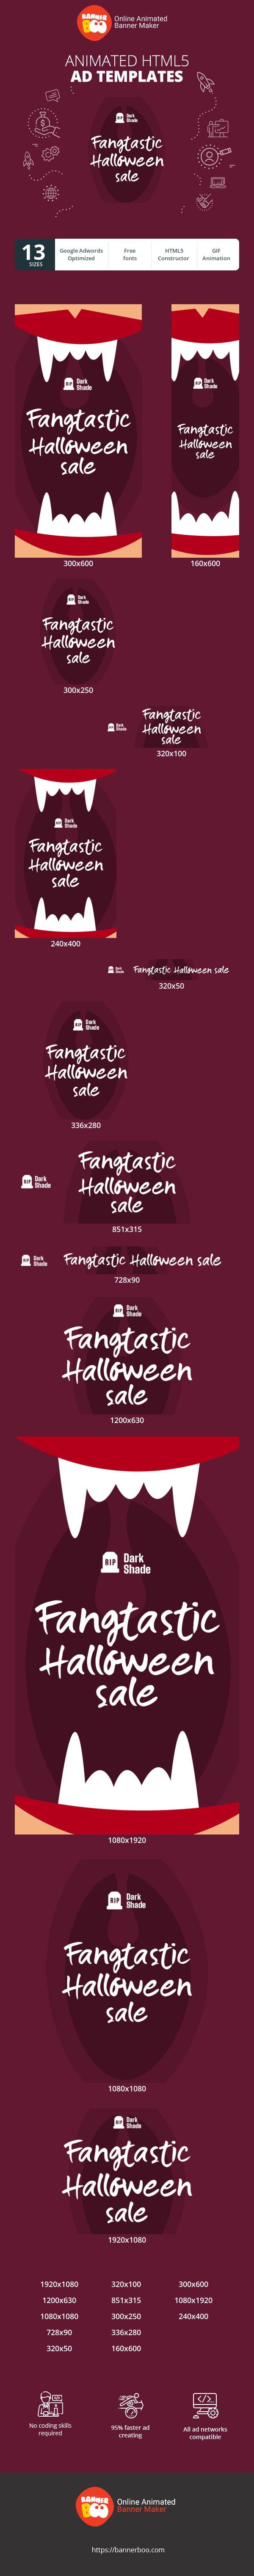 Banner ad template — Fangtastic Halloween Sale — Enjoy Your Discount